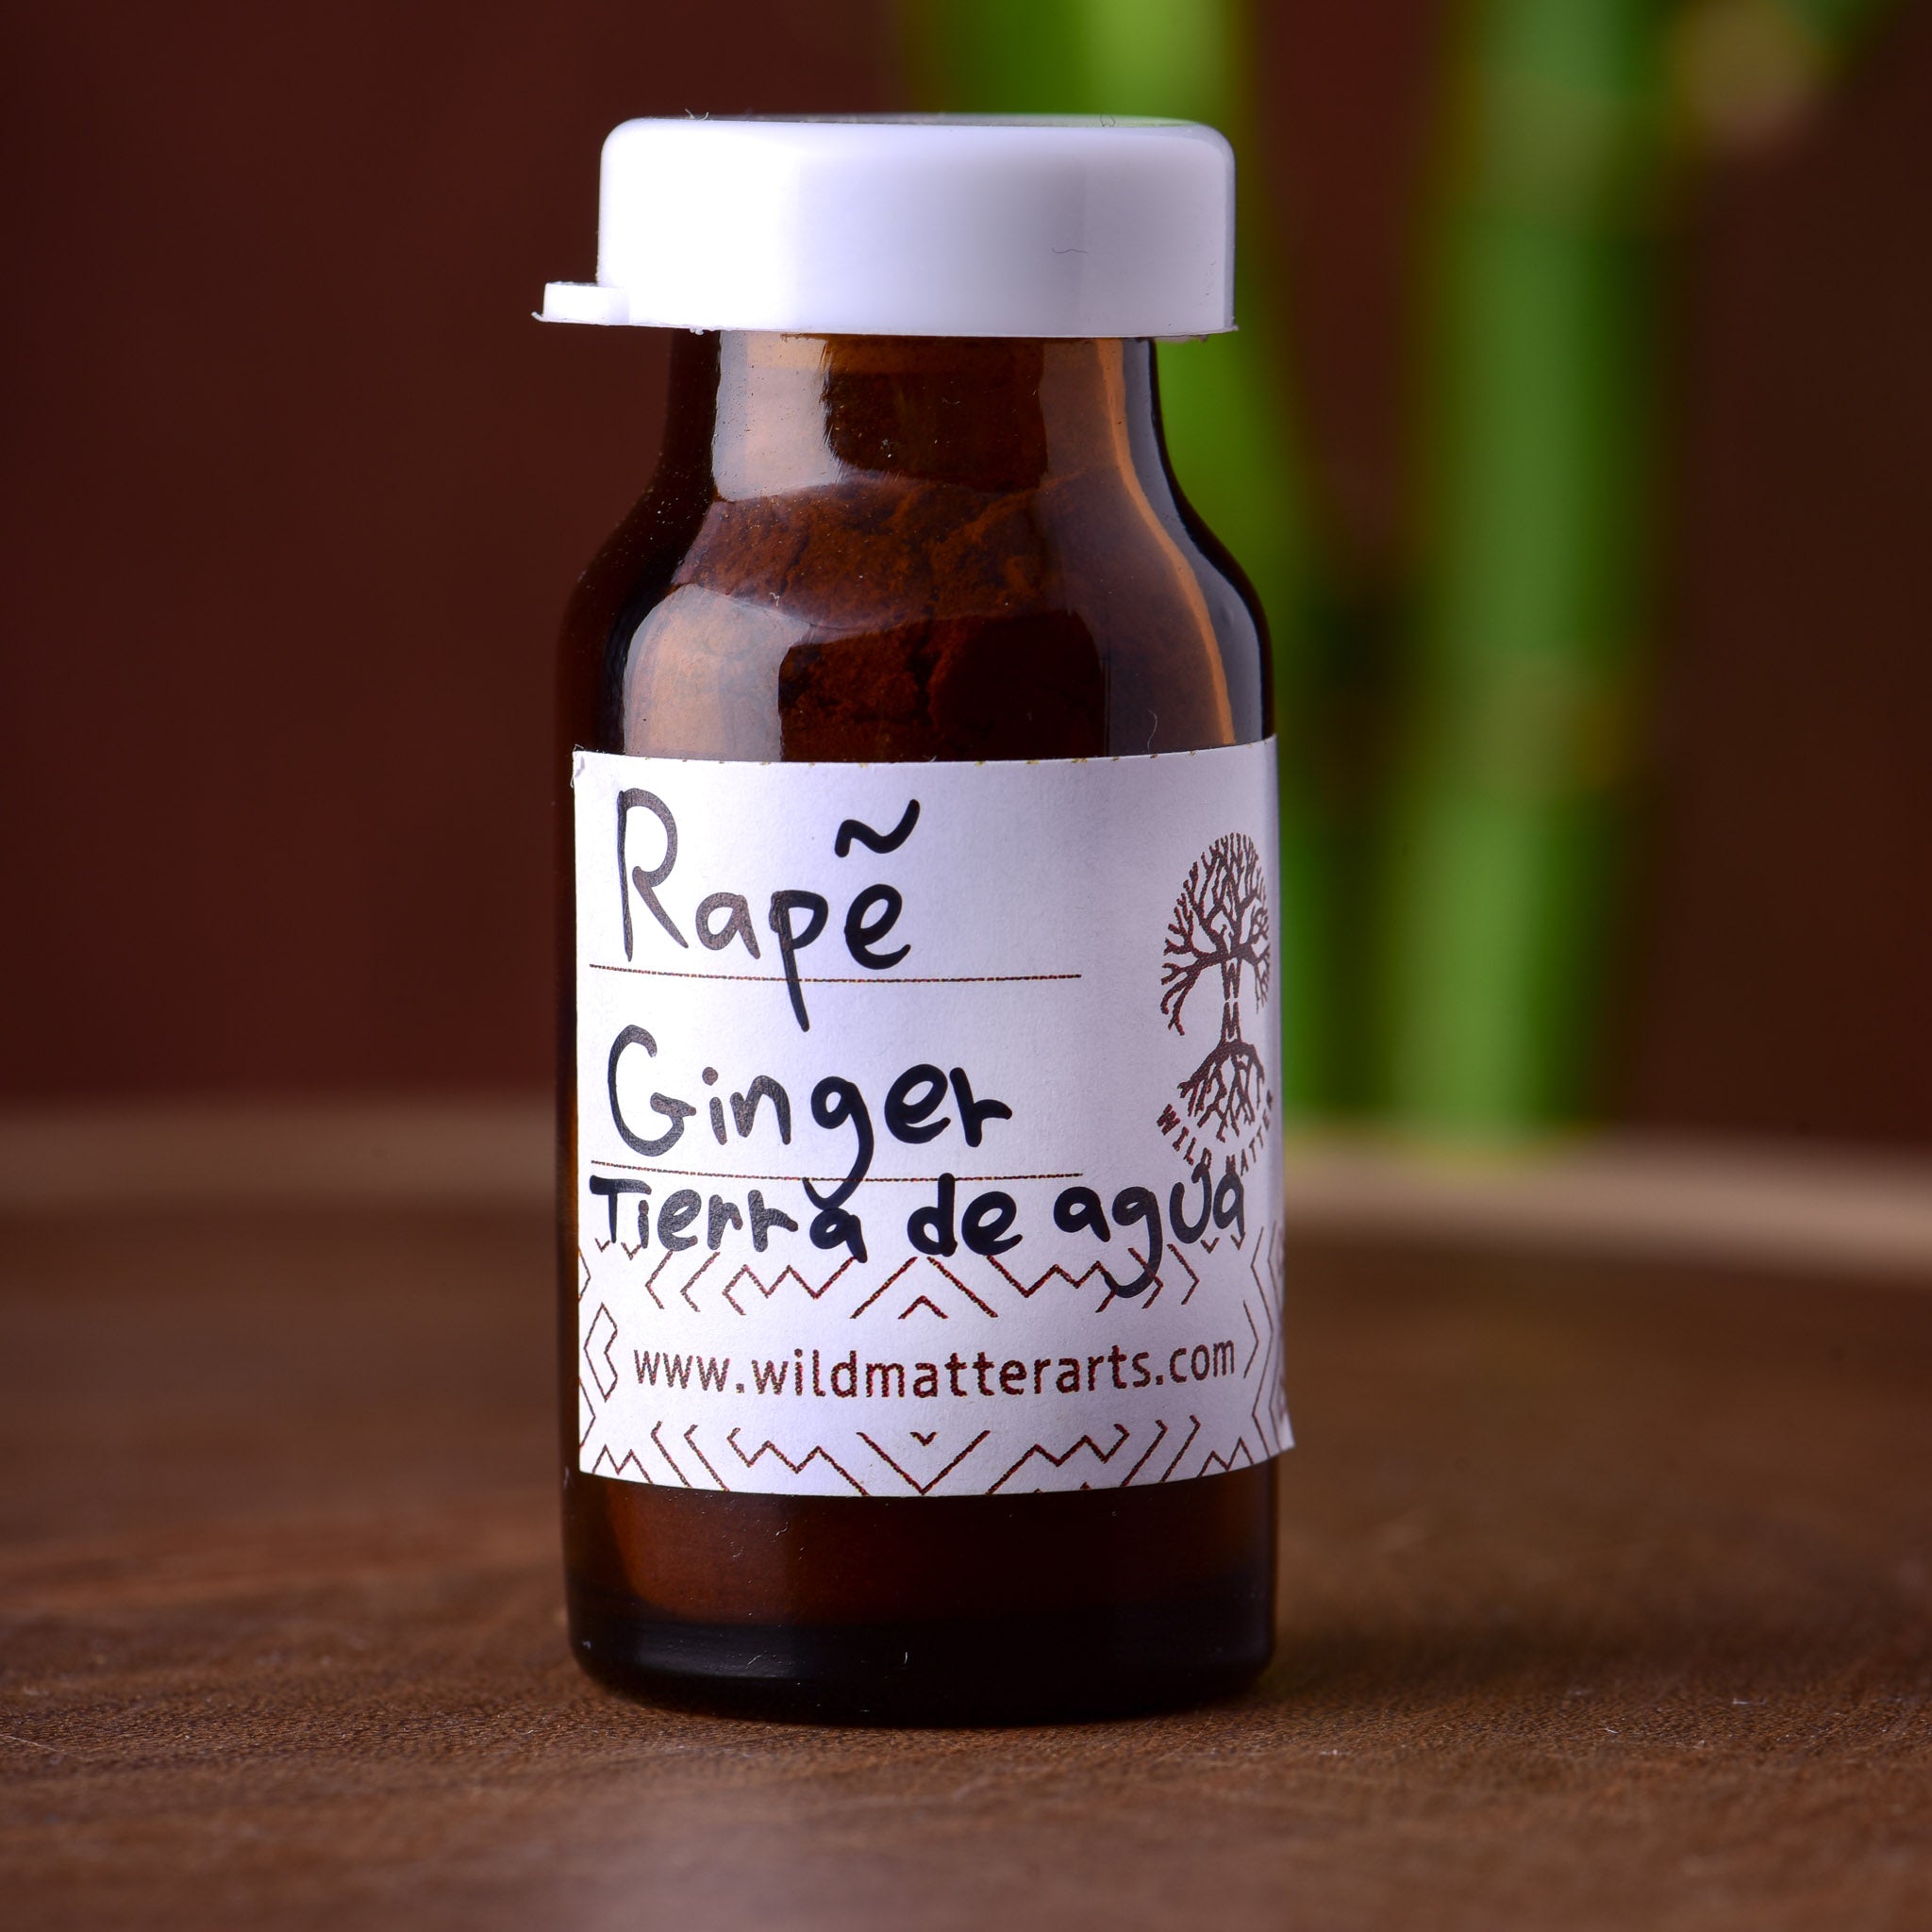 Rapé Ginger - Made In Tierra de Agua, Colombia Ginger Flavor